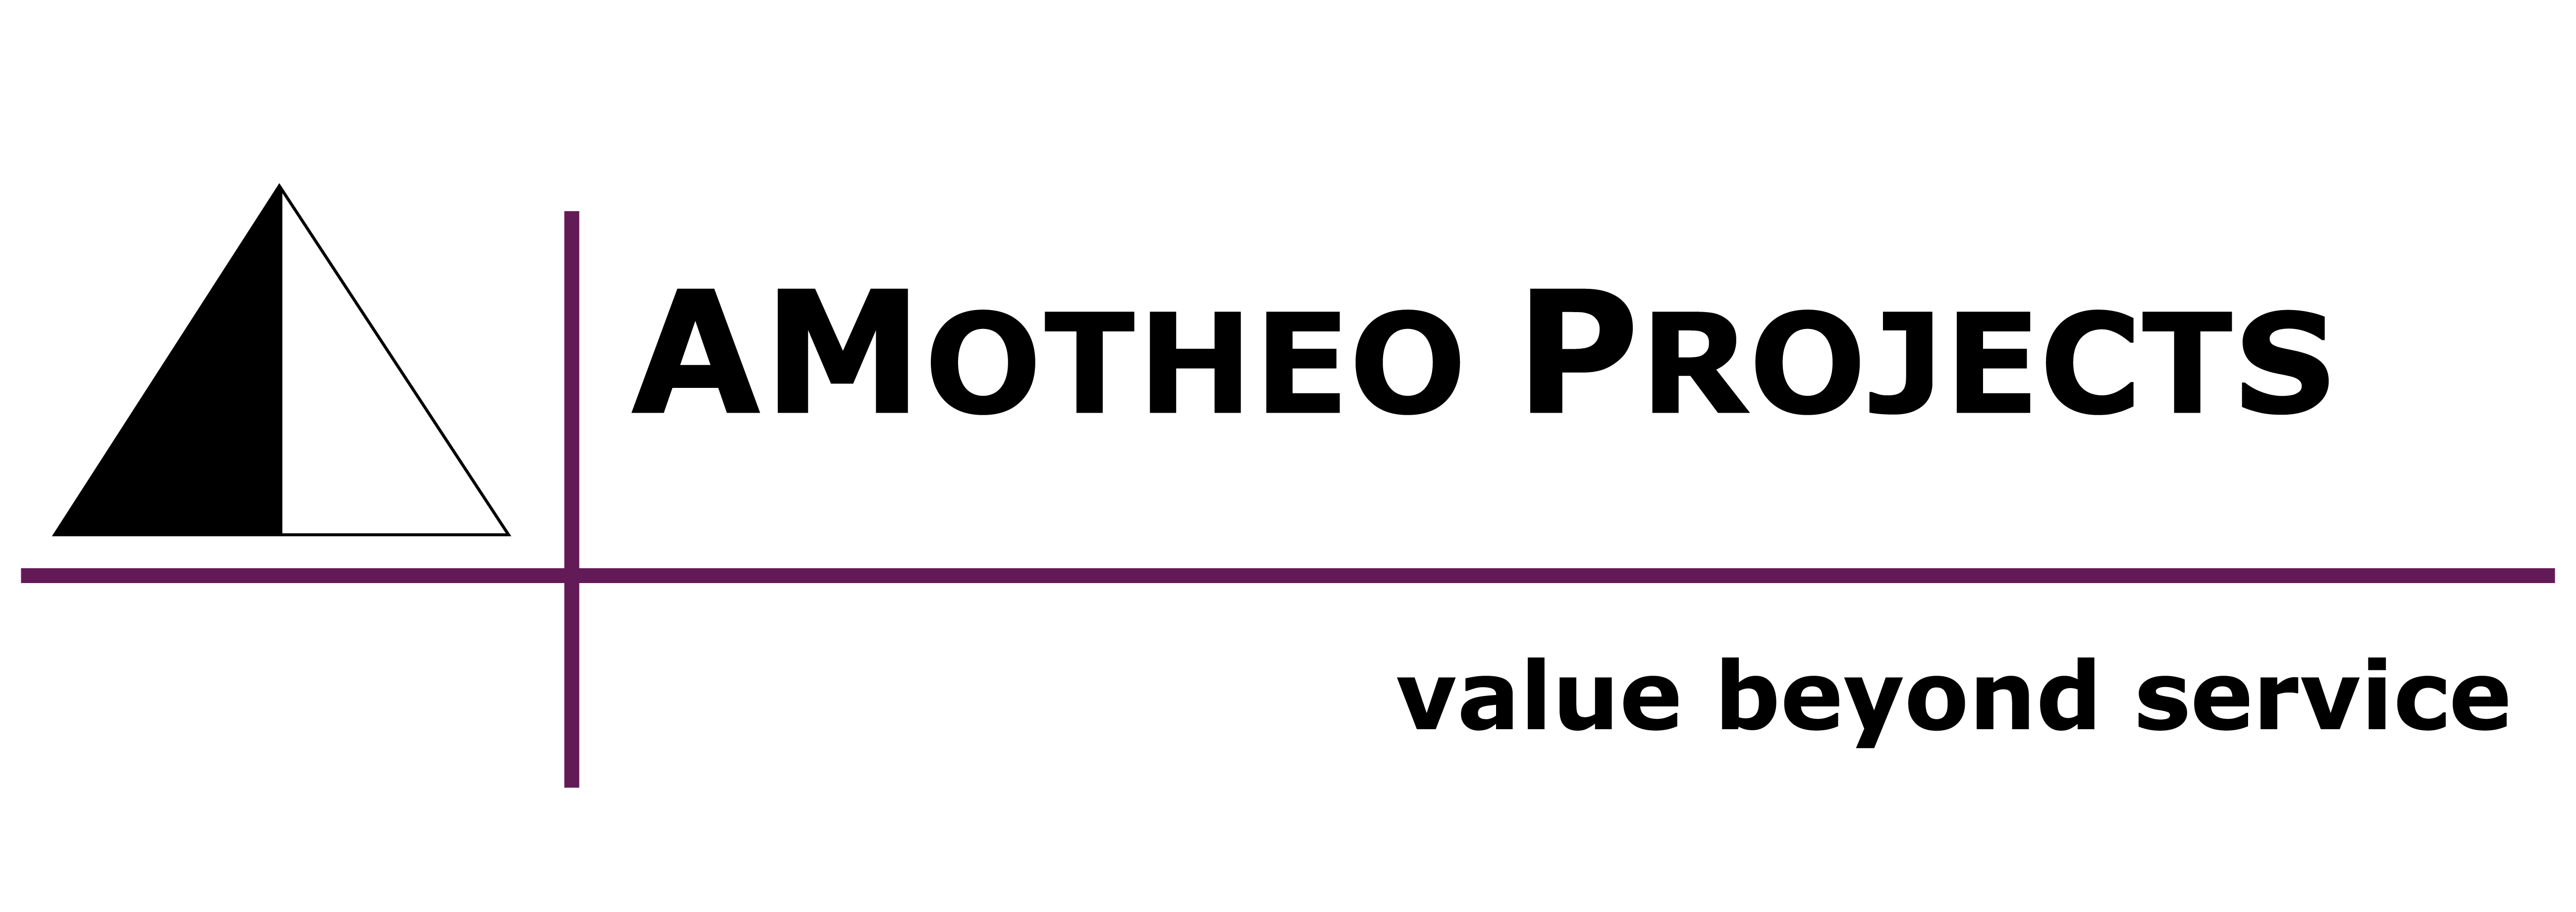 Amotheo Projects logo